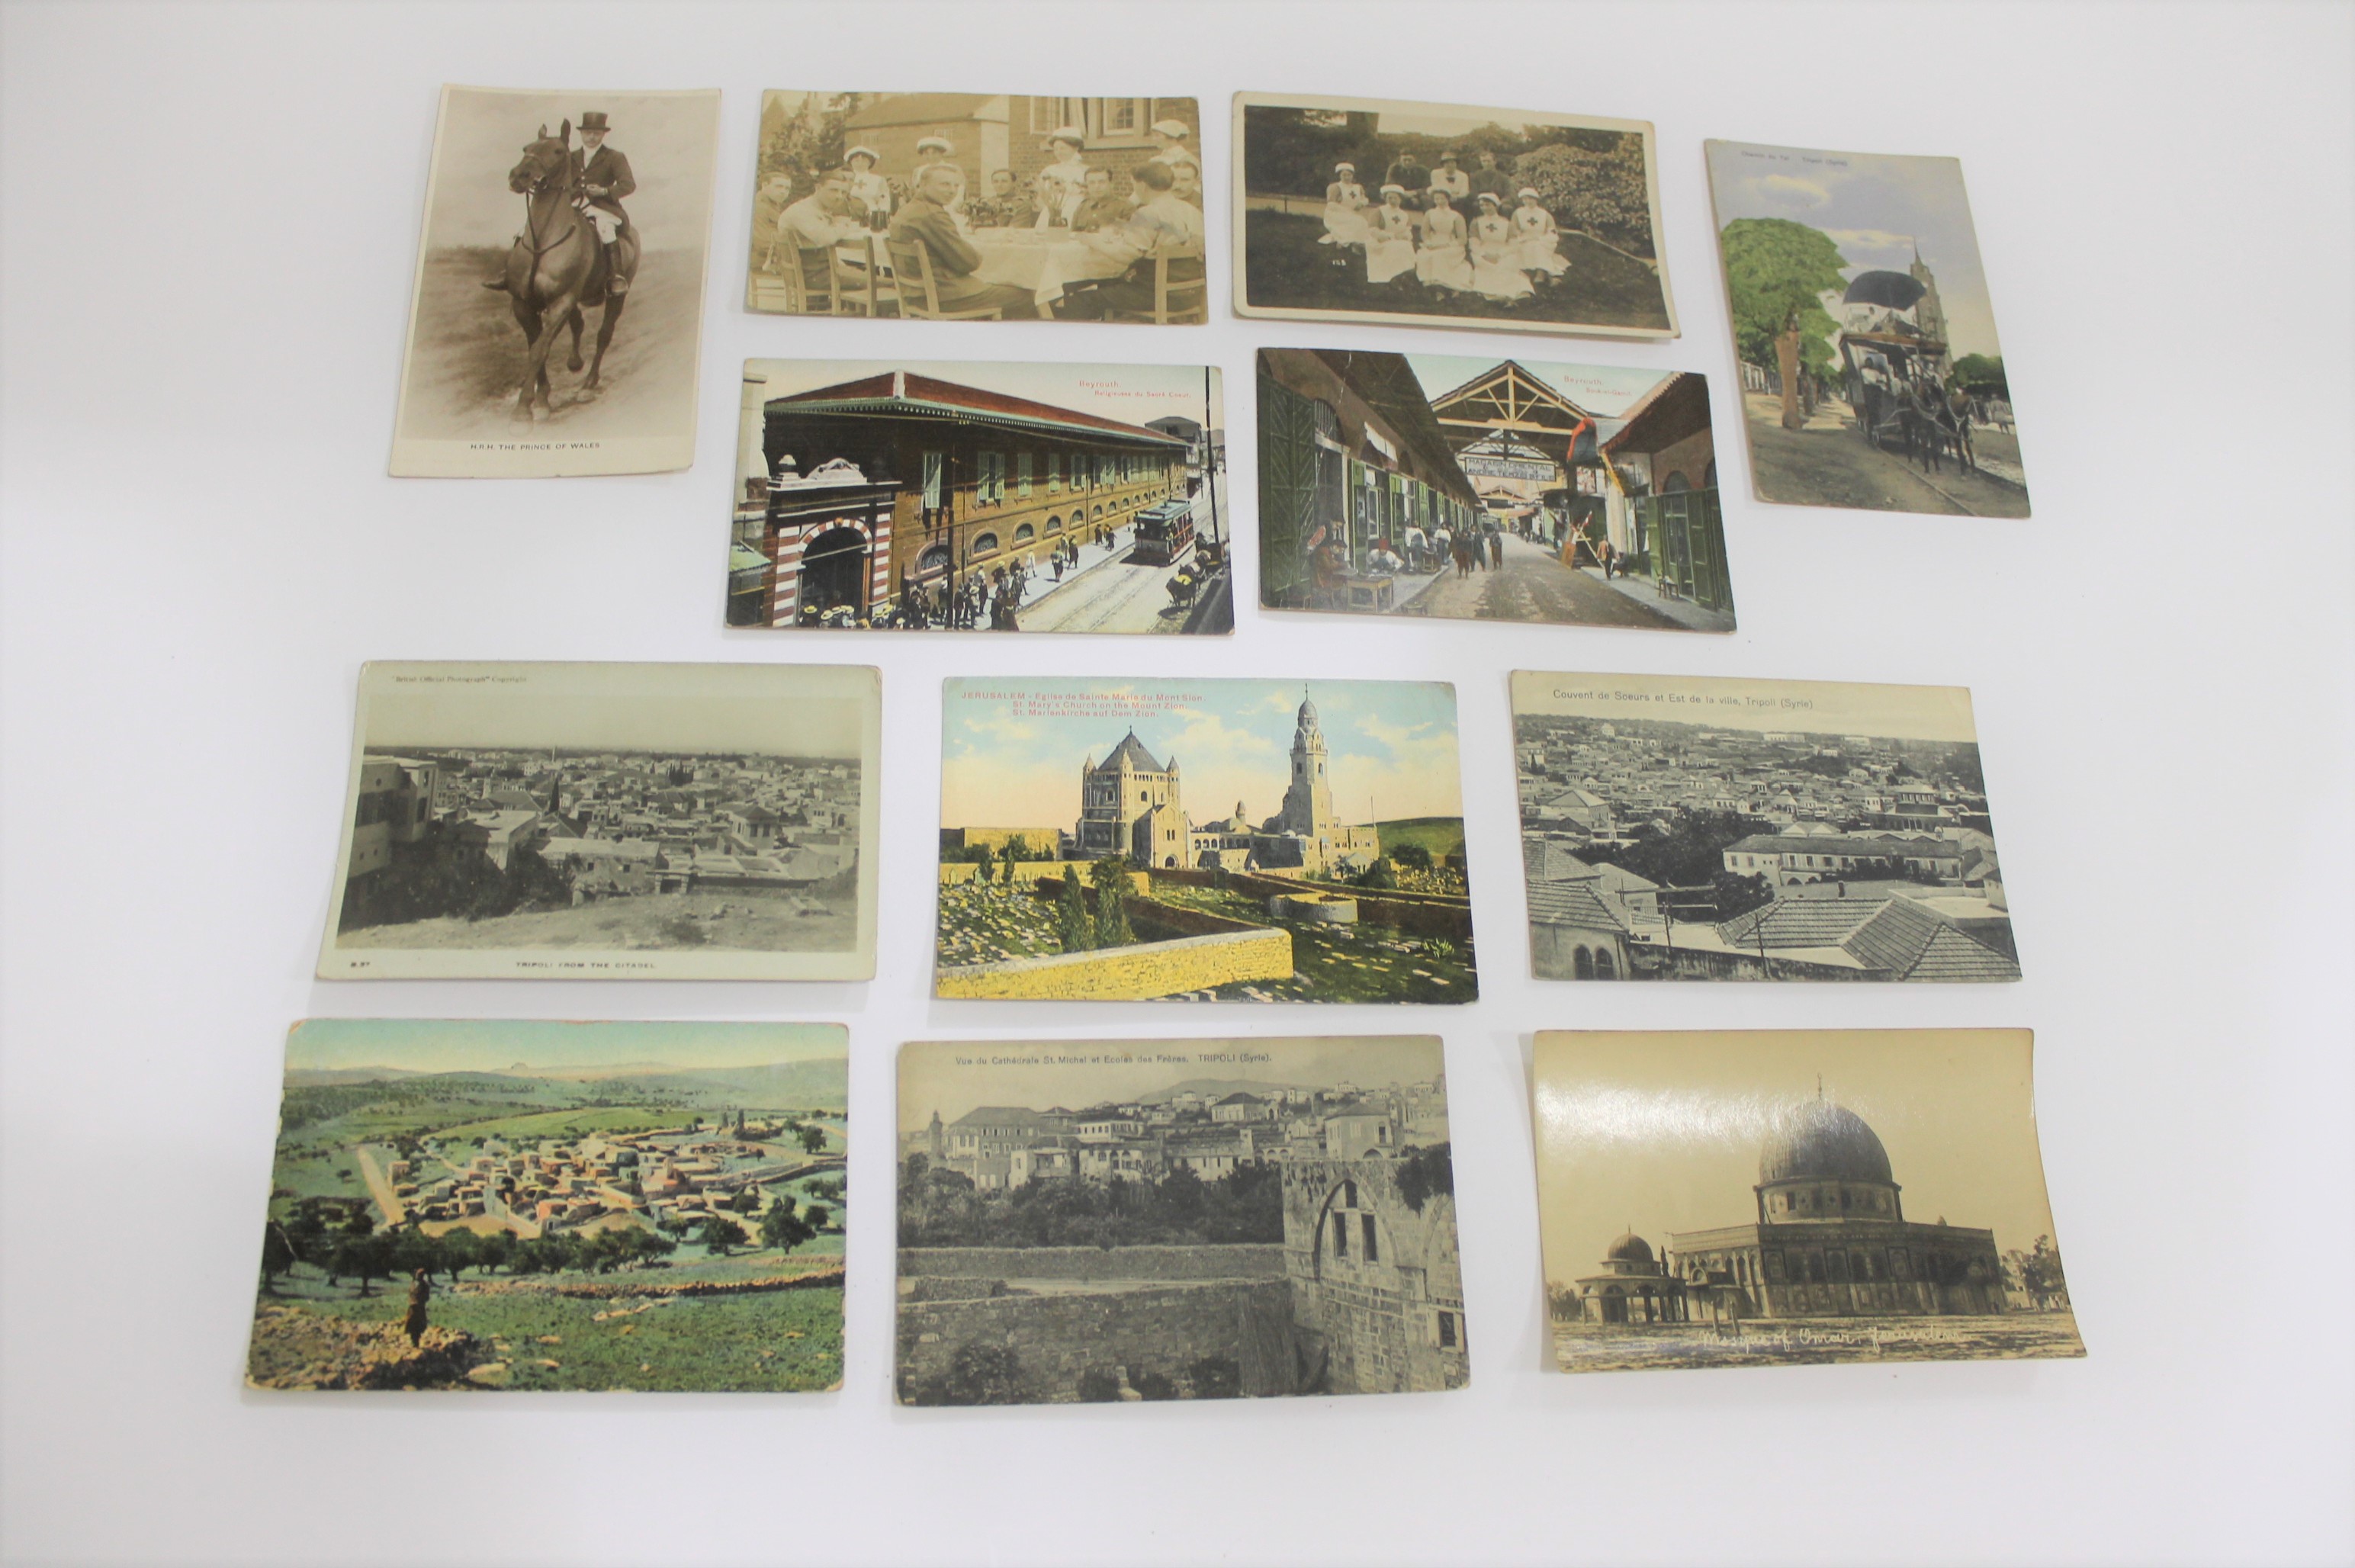 COLLECTION OF POSTCARDS - MIDDLE EAST approx 55 vintage postcards including Jerusalem (Damascus